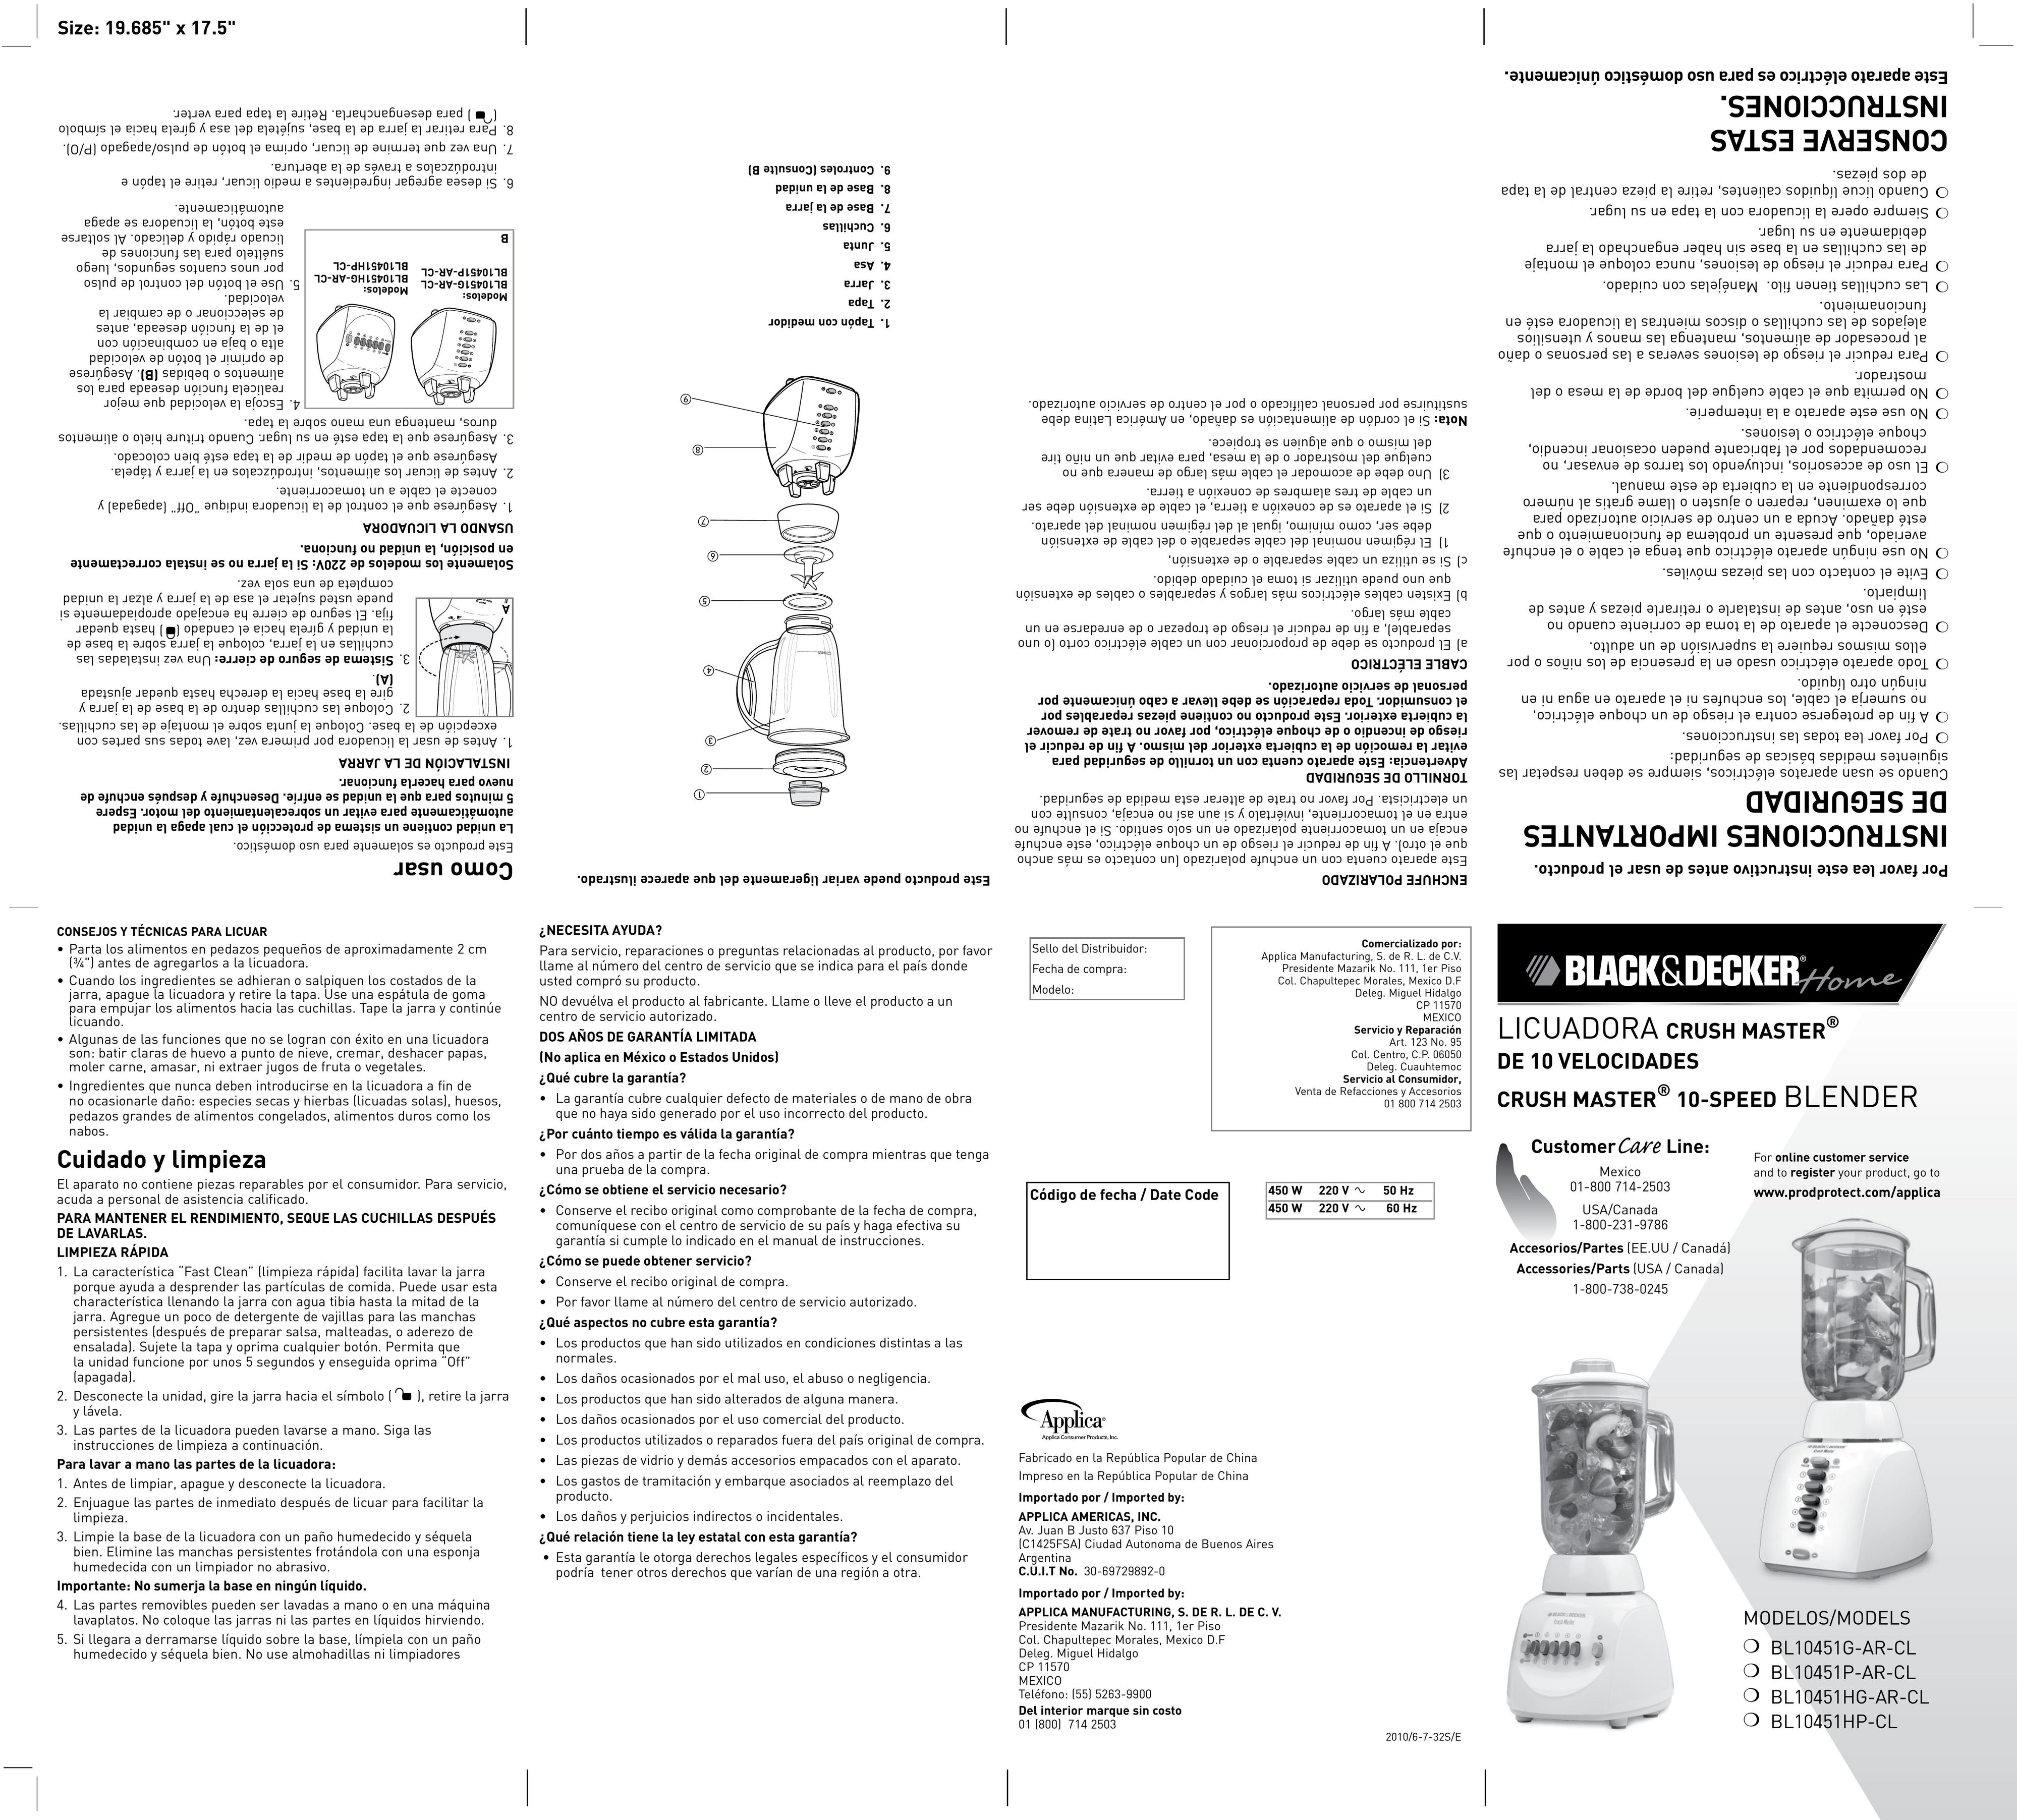 Black & Decker BL10451HP-CL Blender User Manual